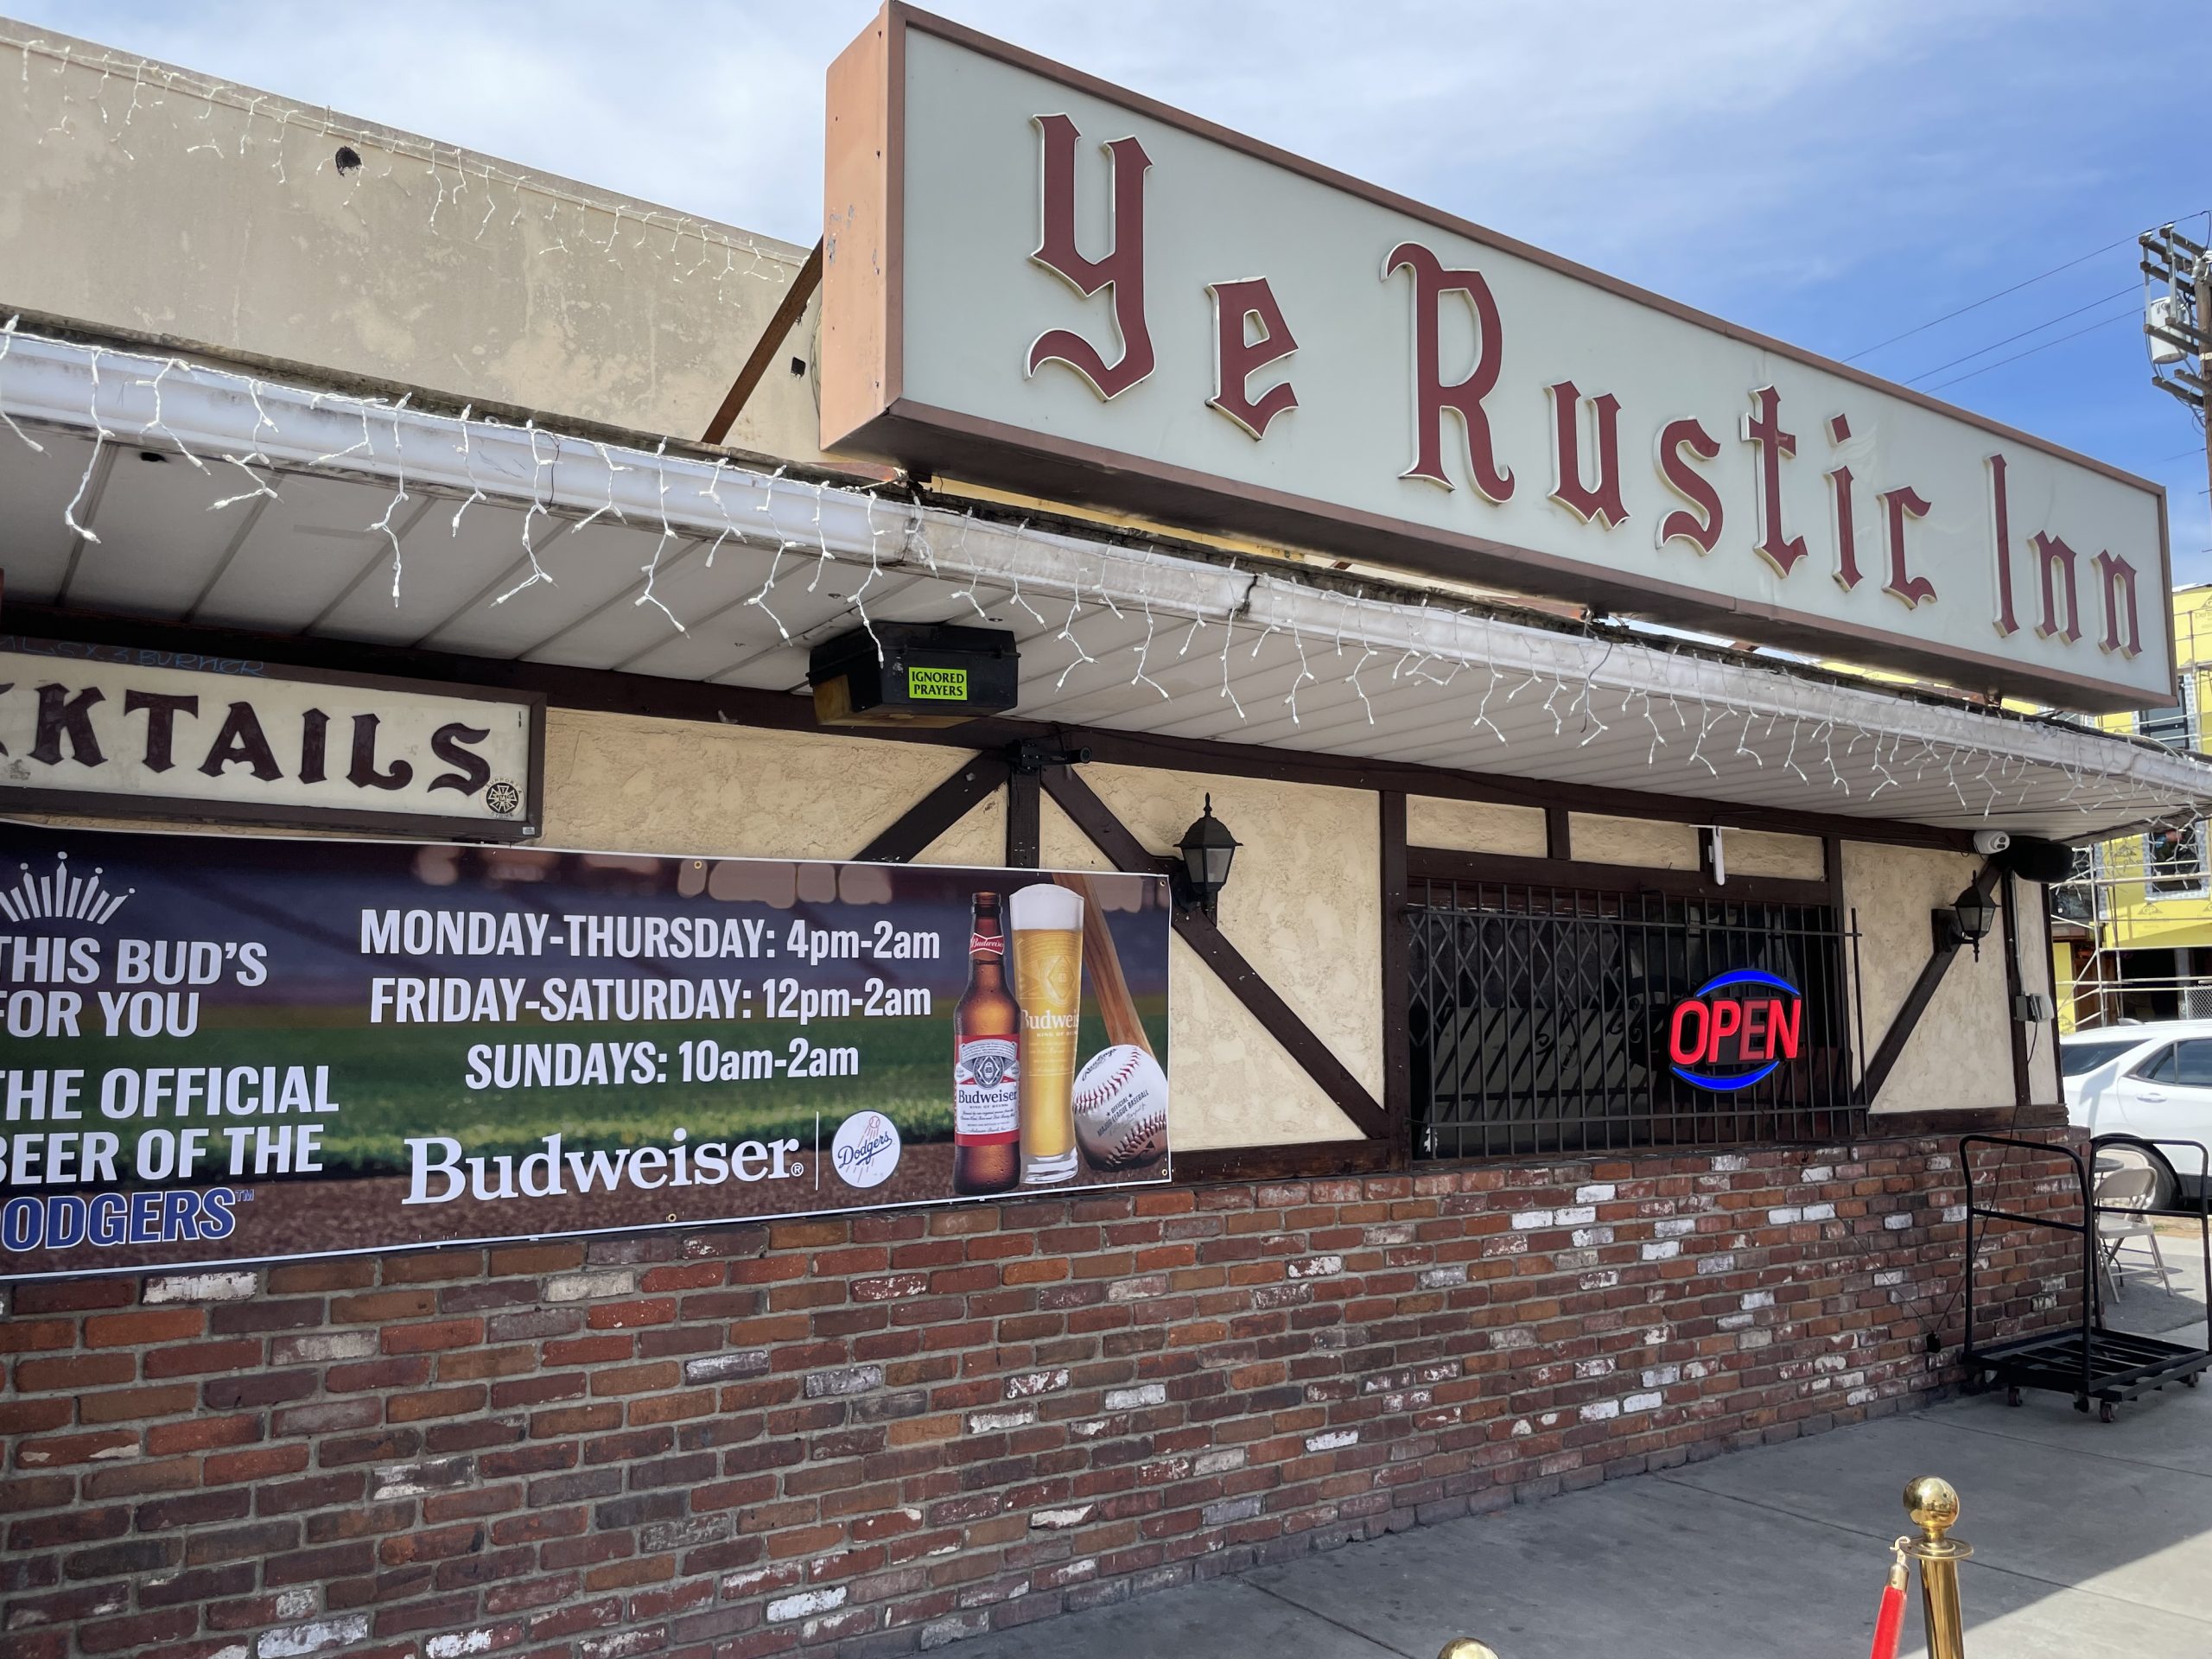 Ye Rustic Inn - Los Angeles Dive Bar - Exterior